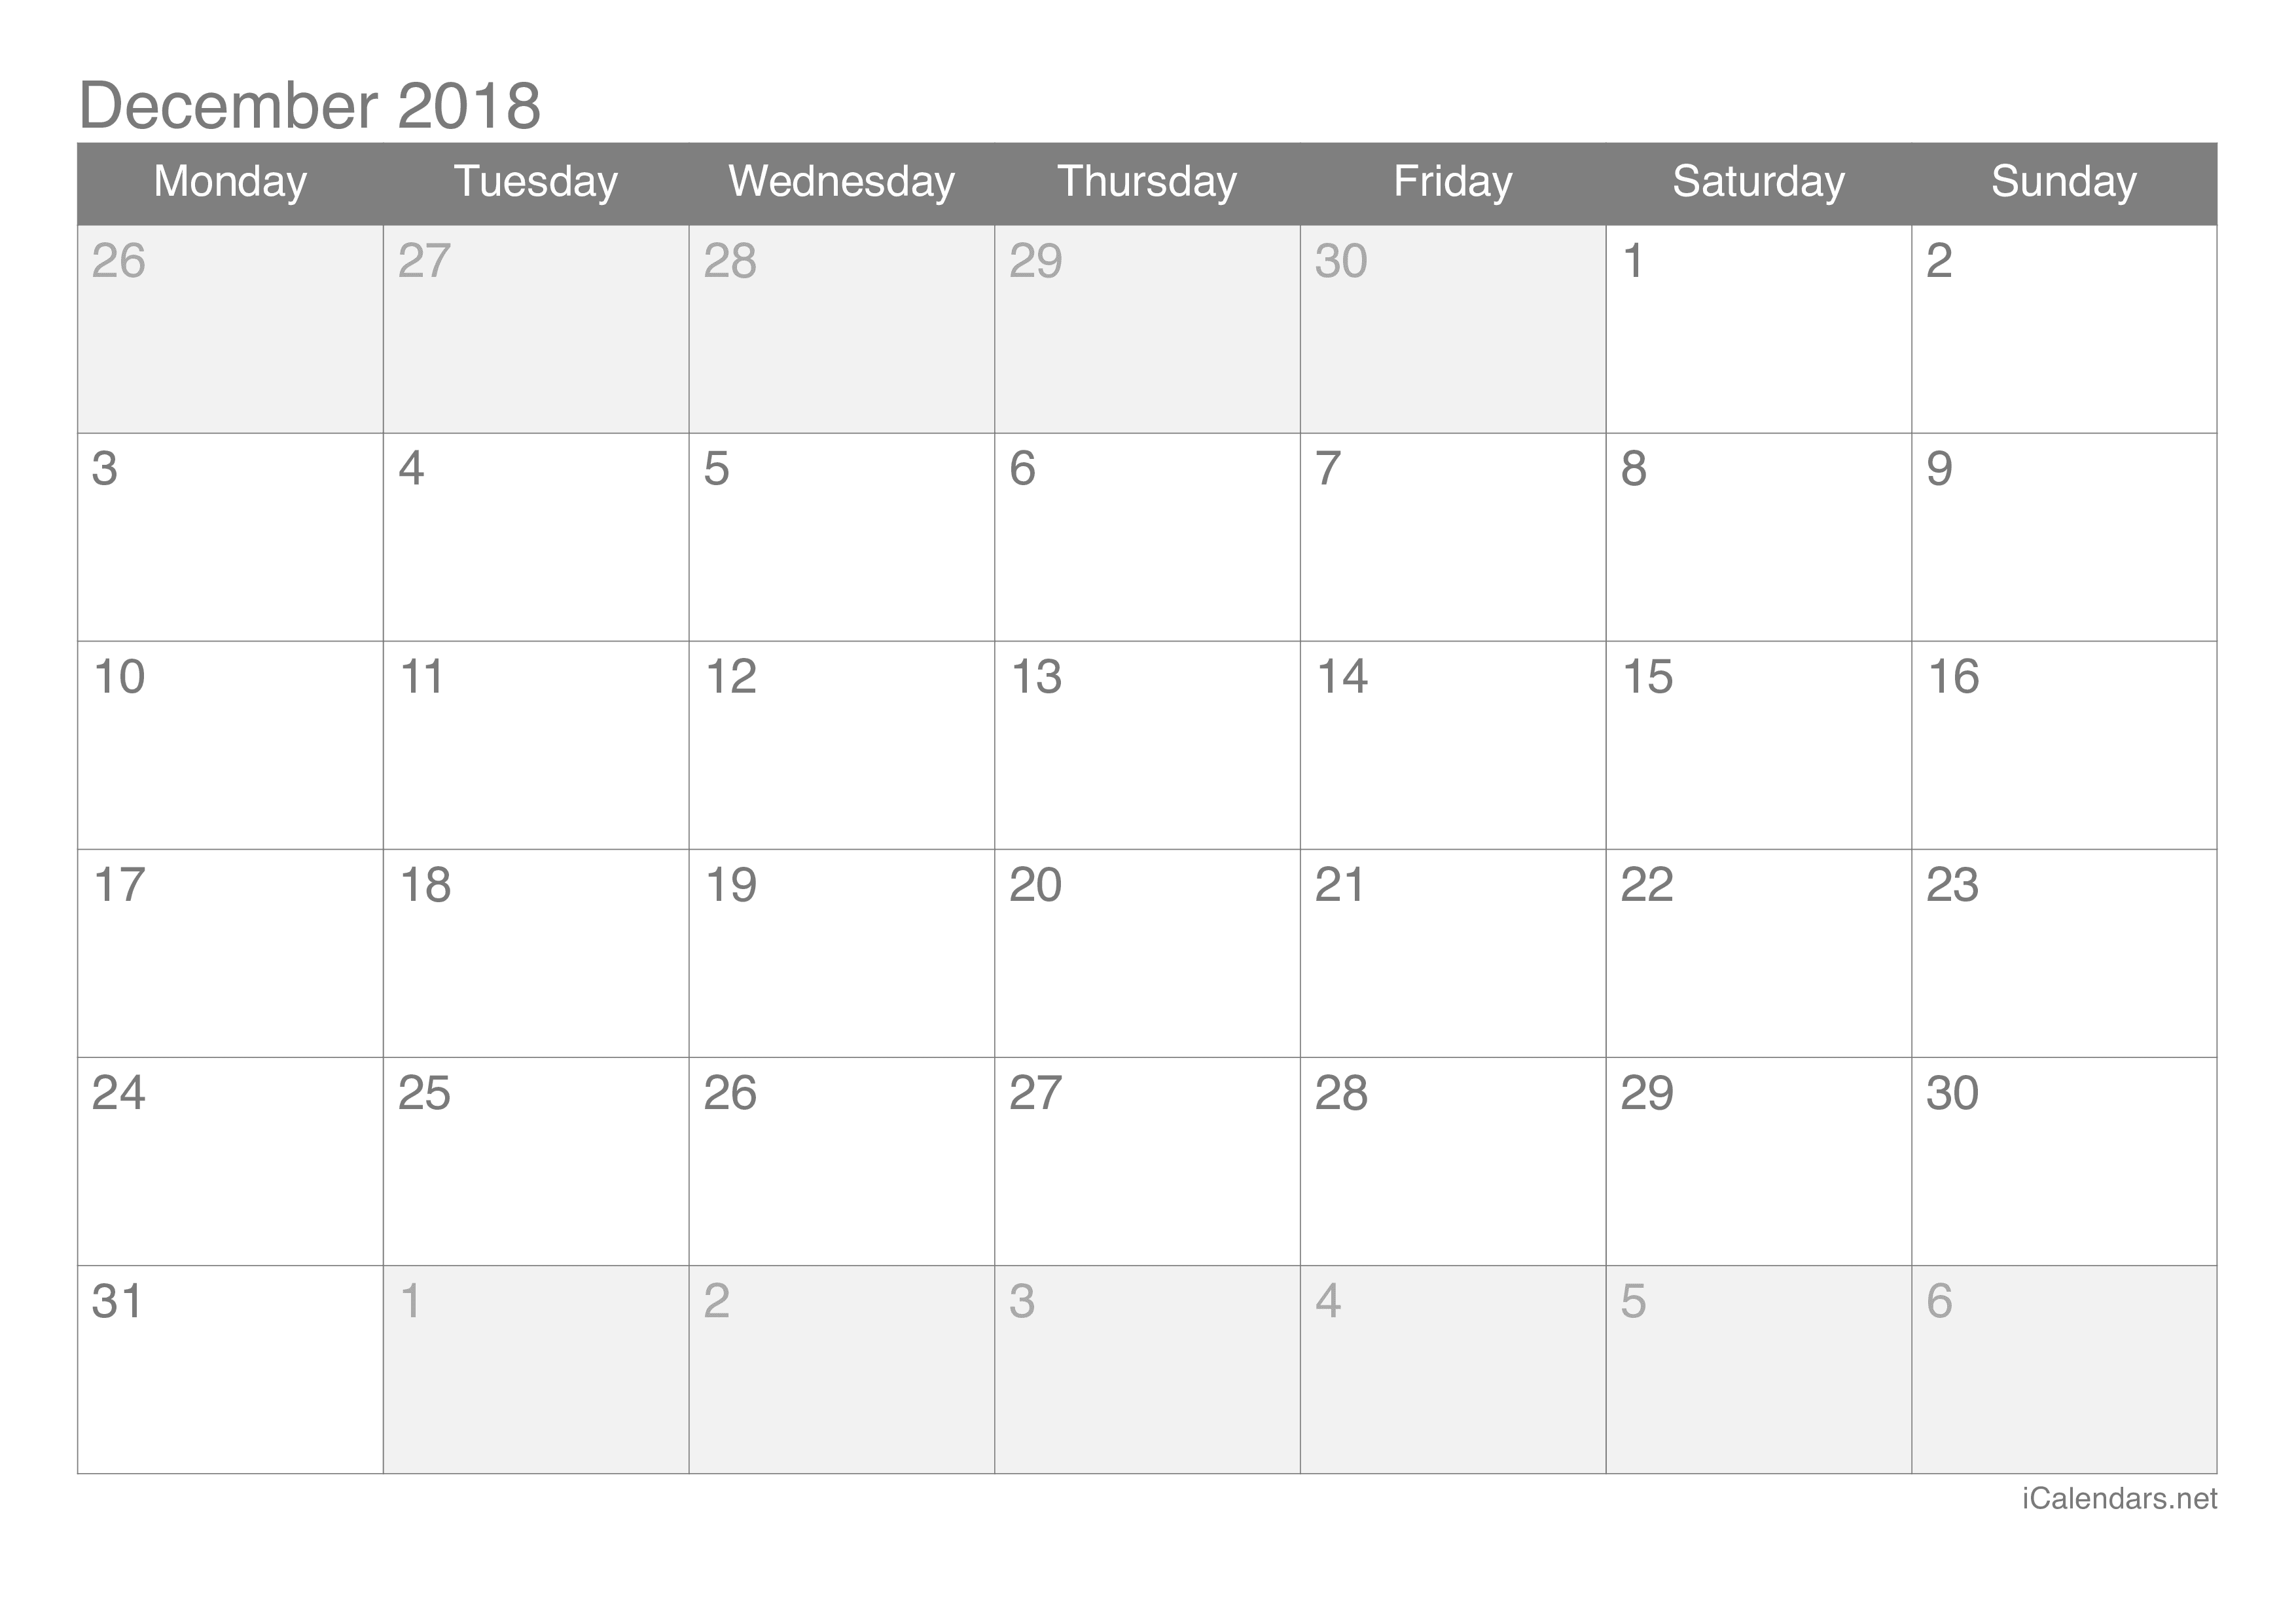 2018 December Calendar